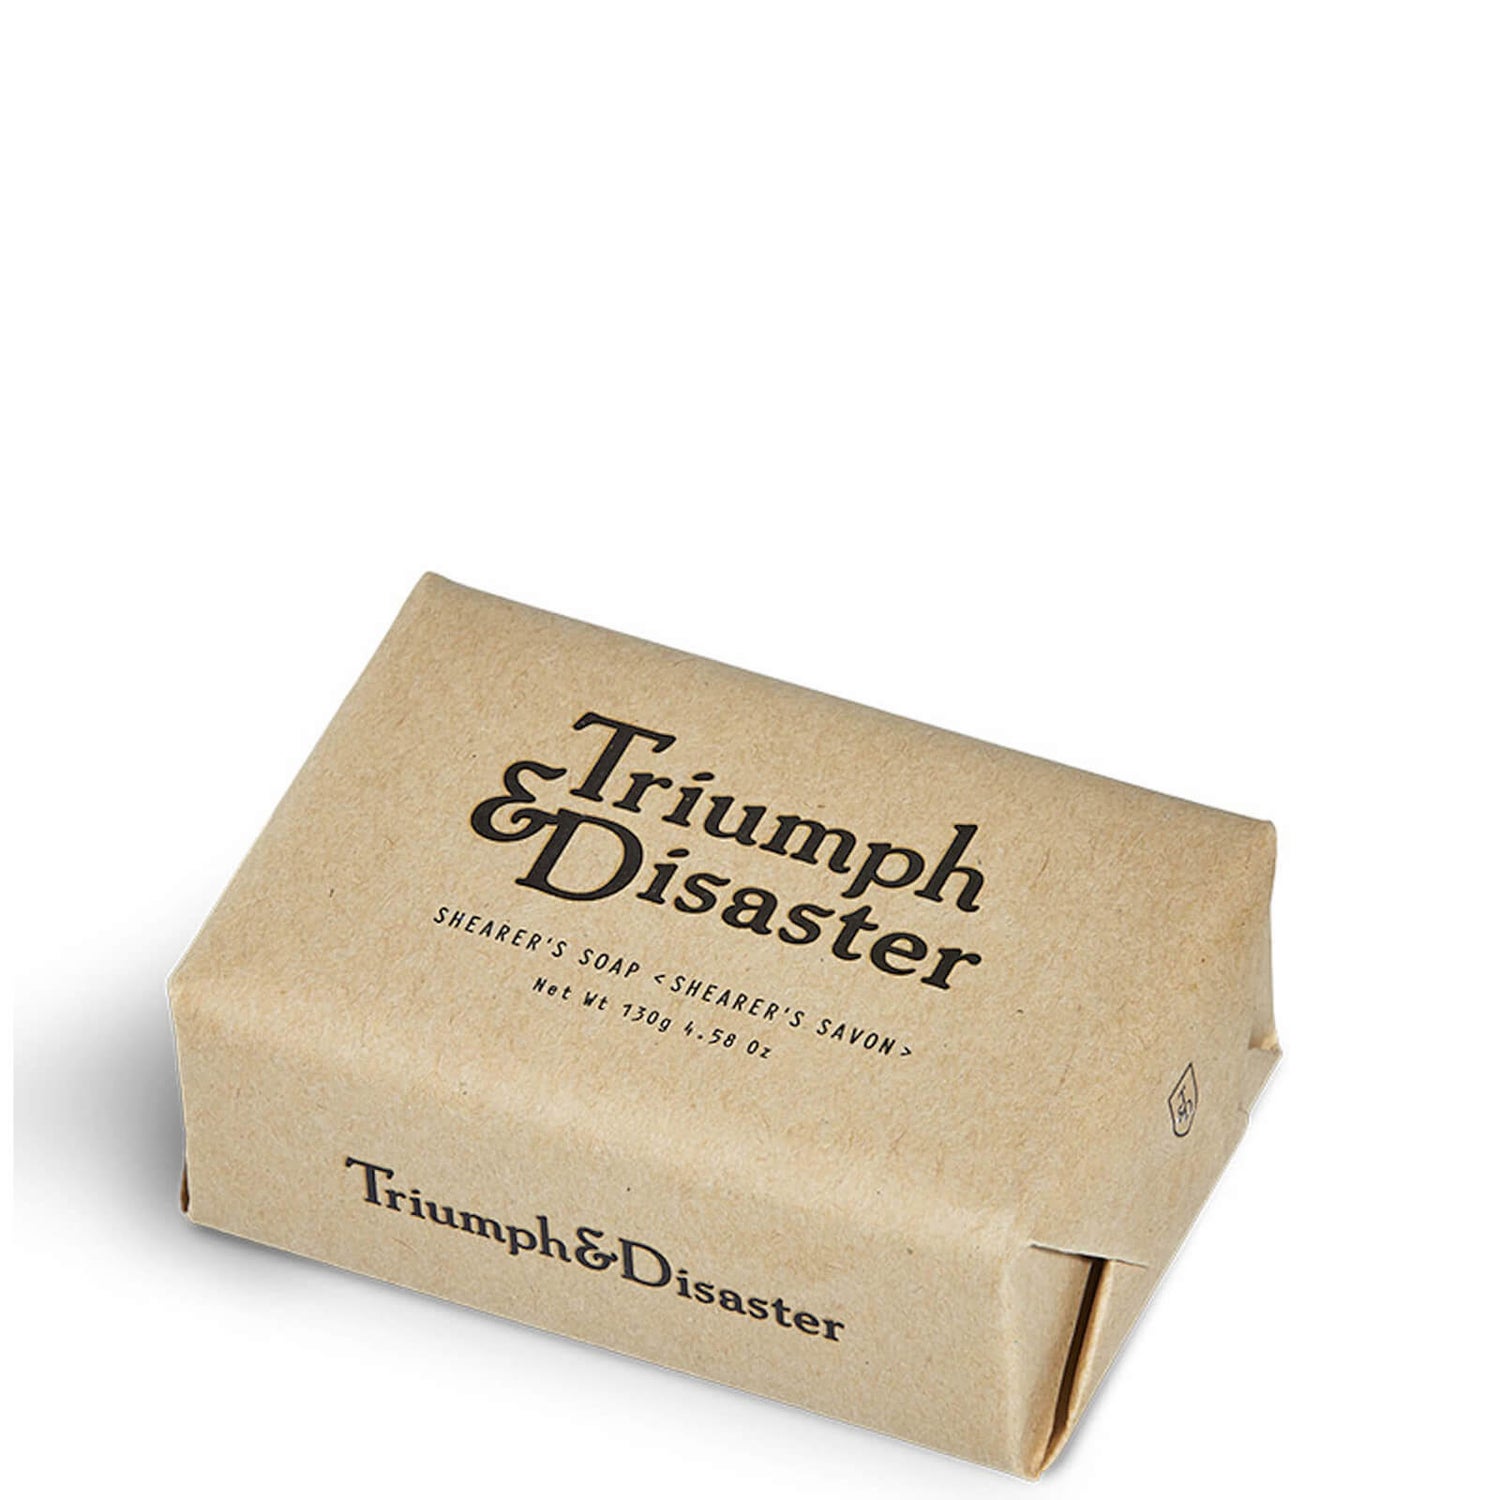 Triumph & Disaster Shearers Soap 130 g